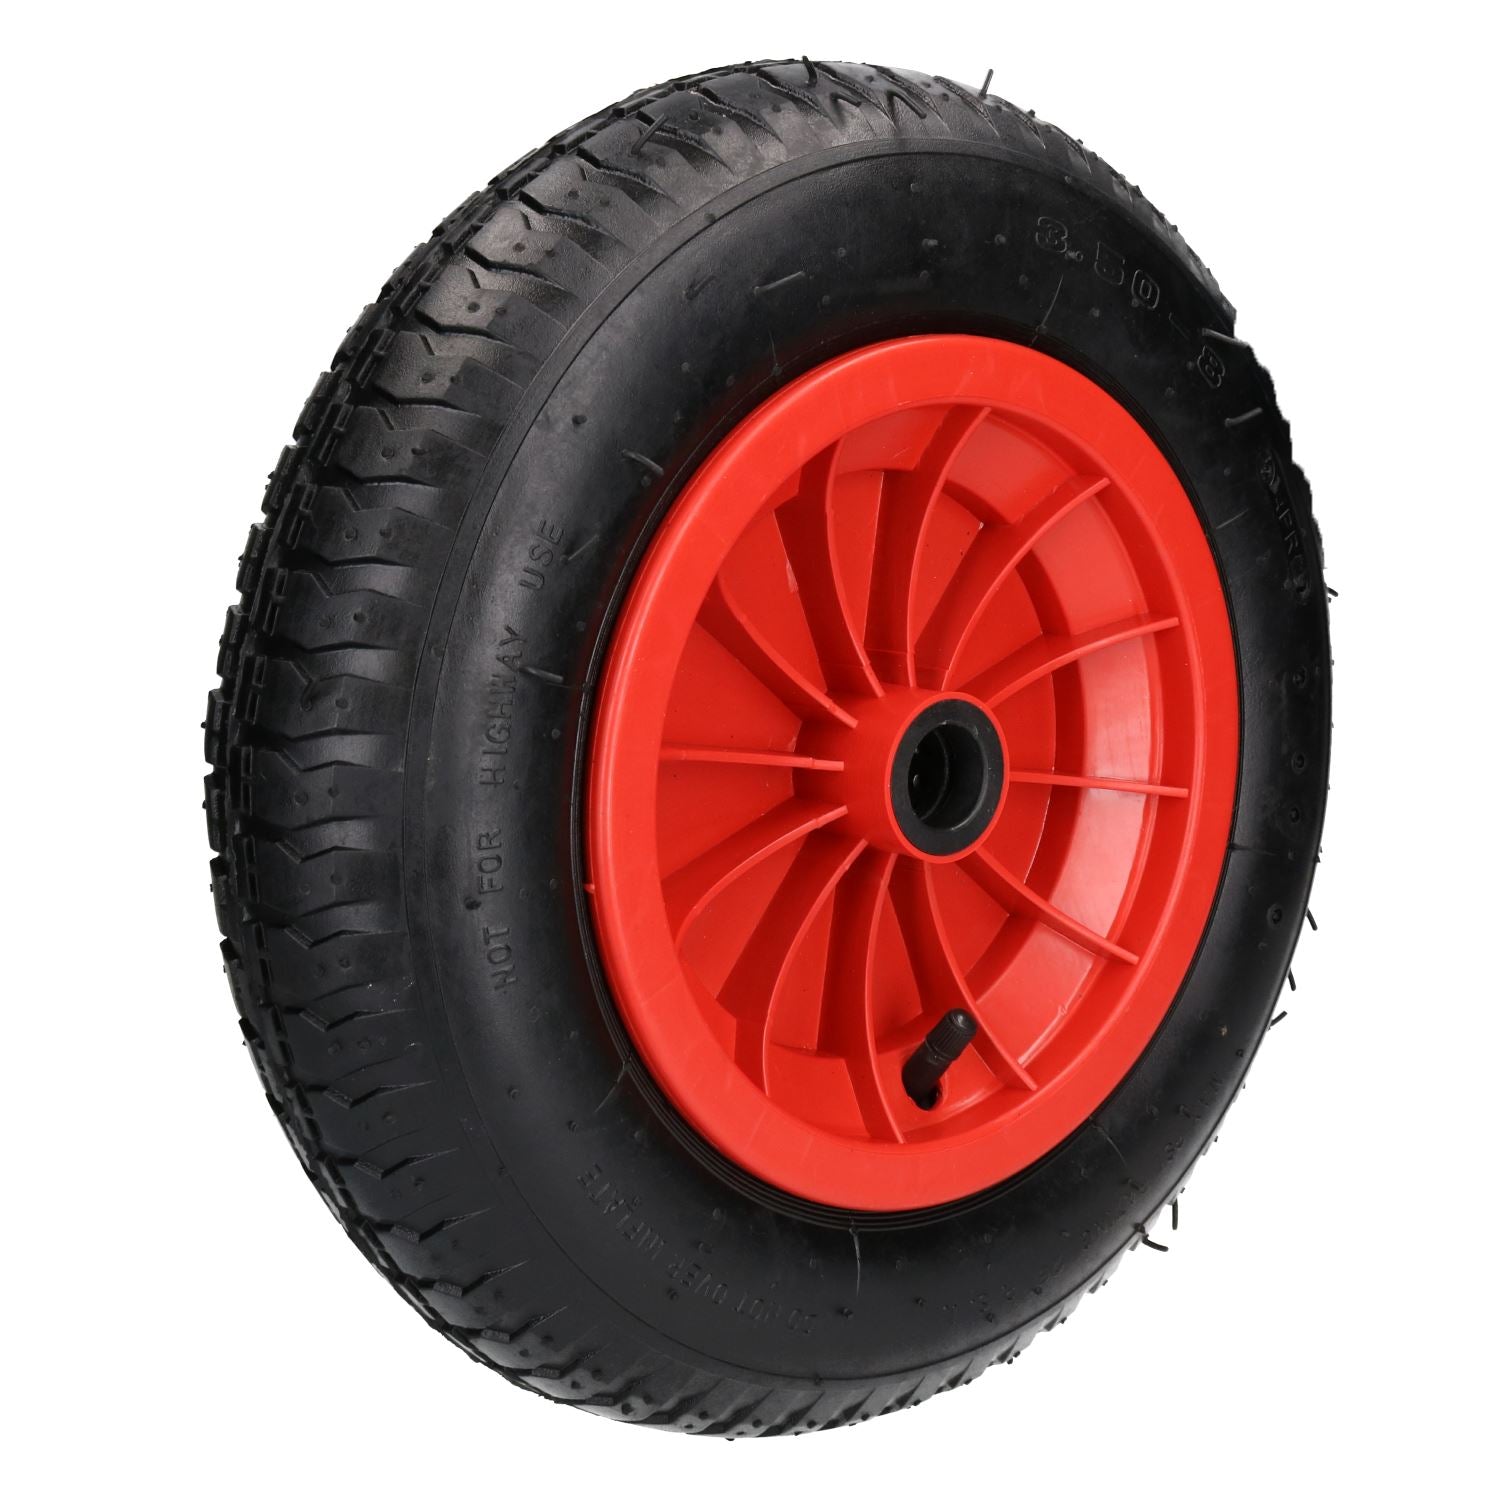 14" Red Wheelbarrow Wheel Tyre Launching 3.50 - 8 Light Weight 4ply  1" Bore